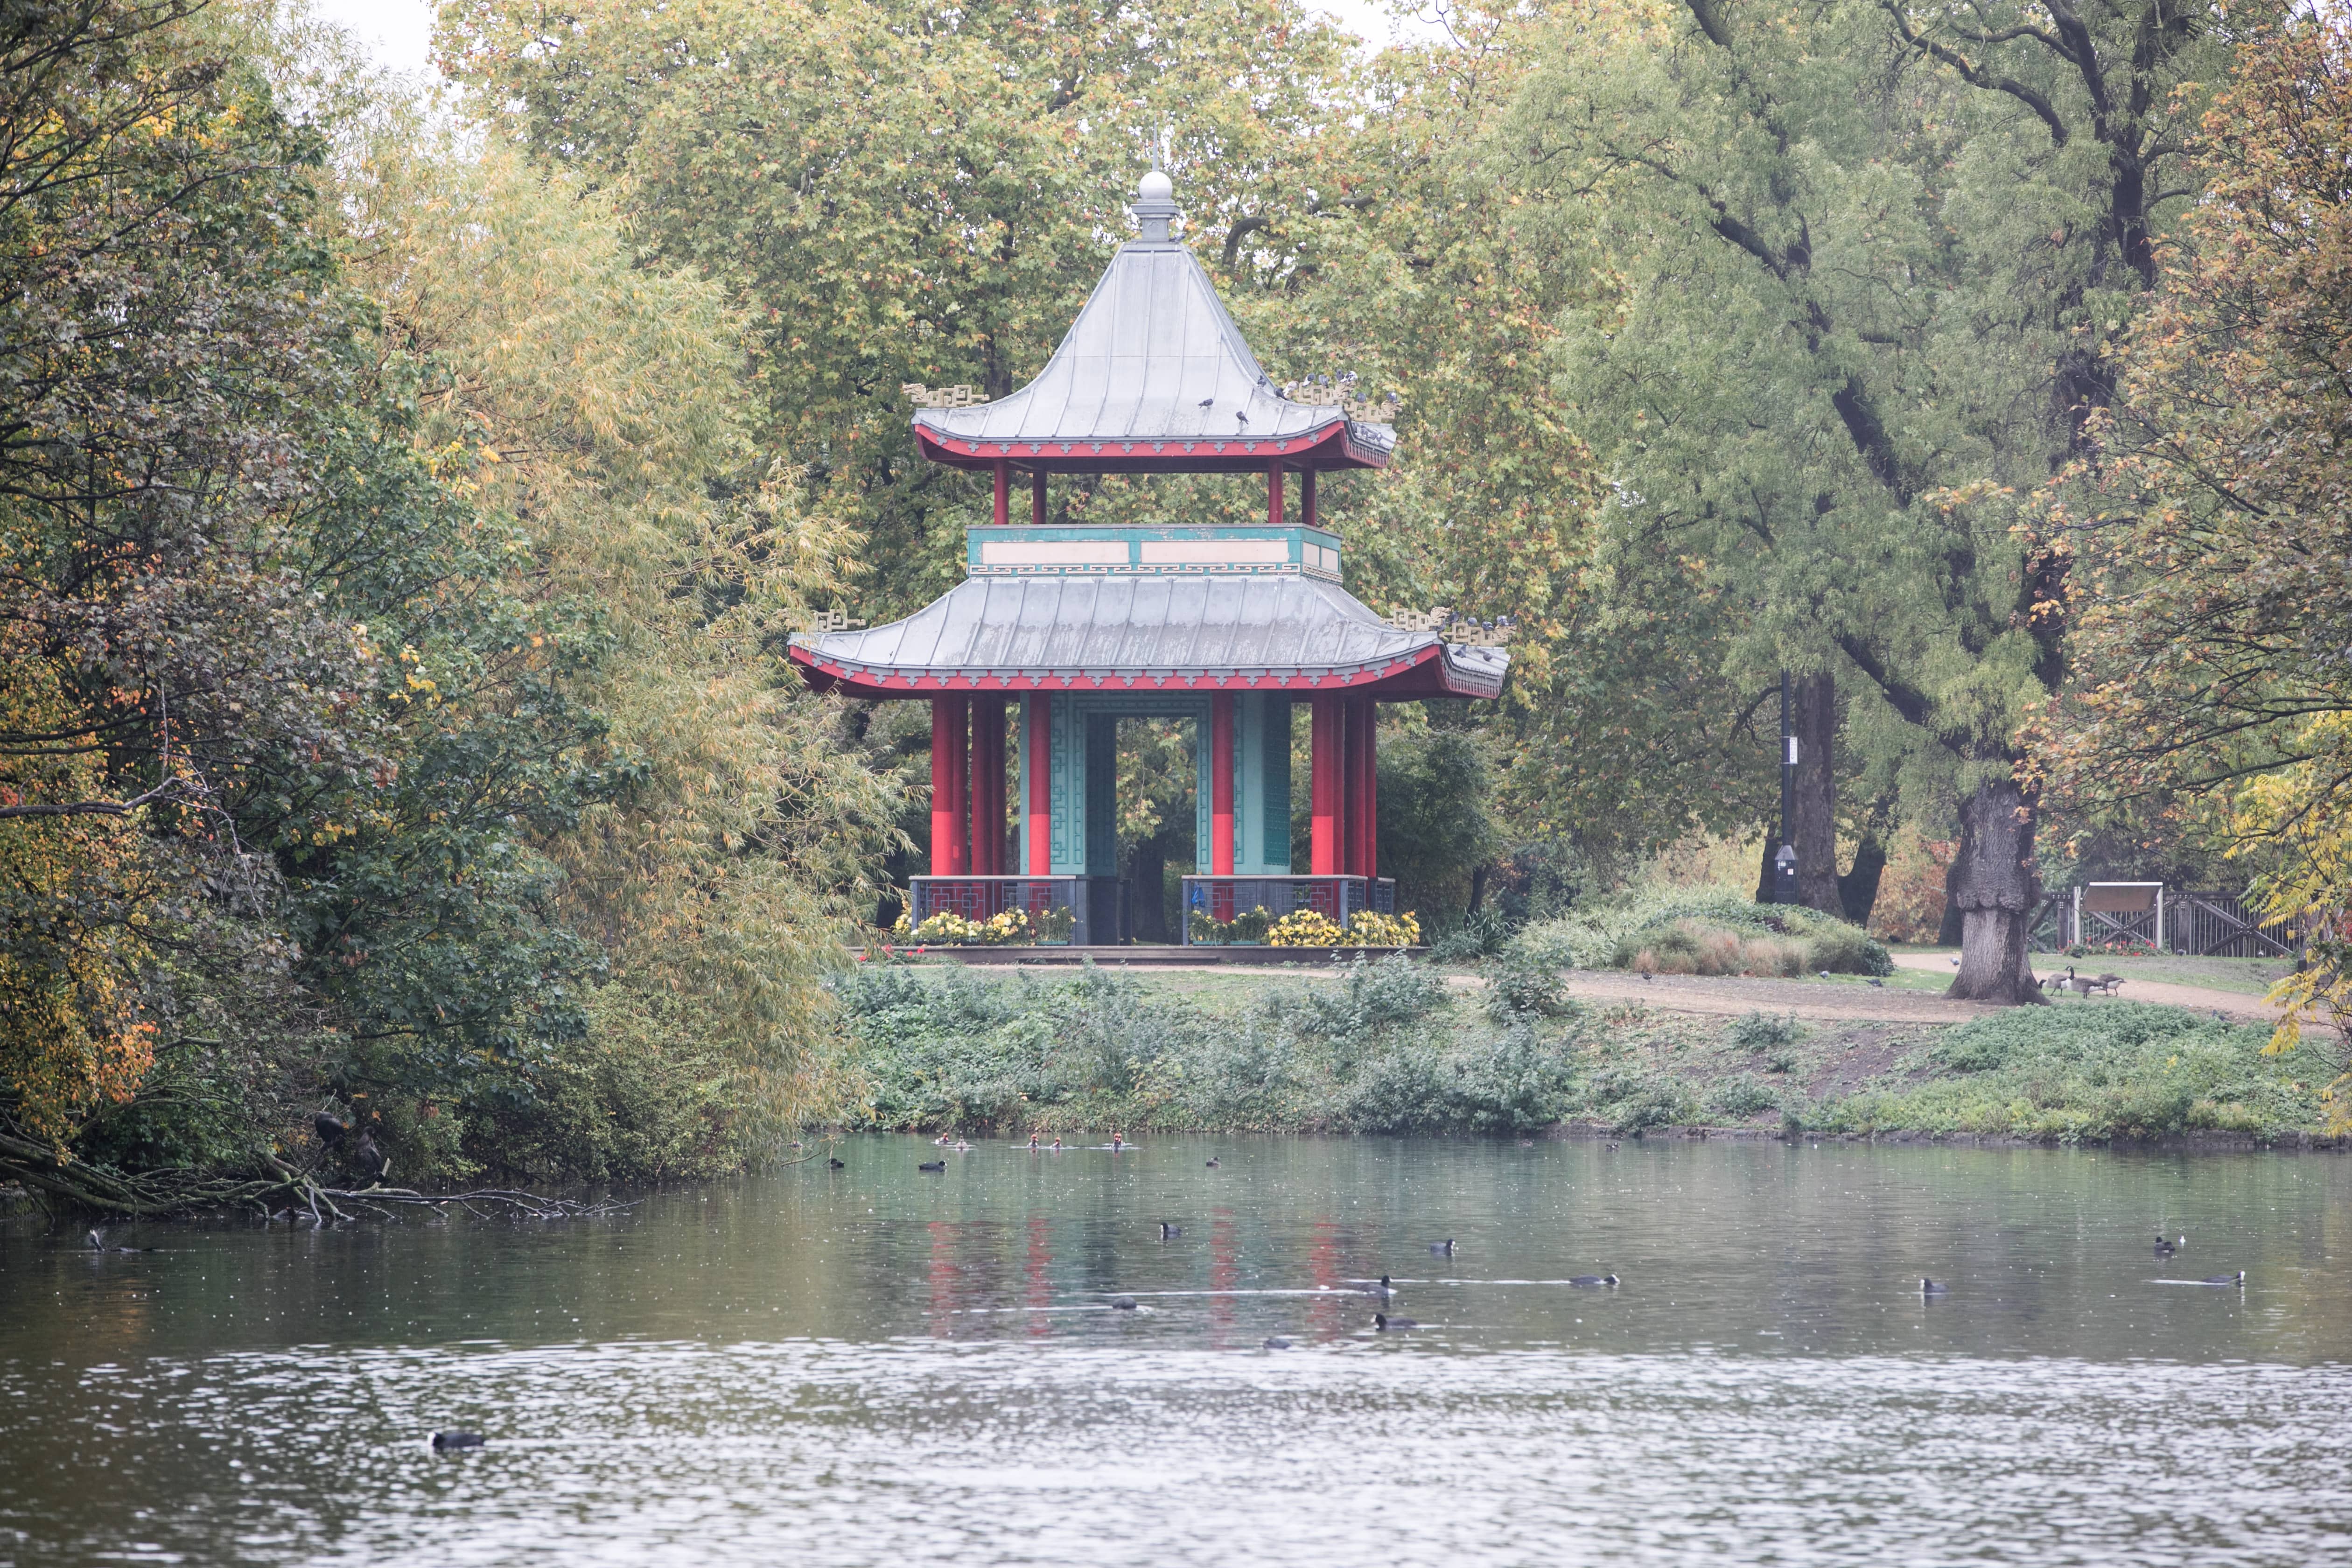 Victoria Park - Pagoda